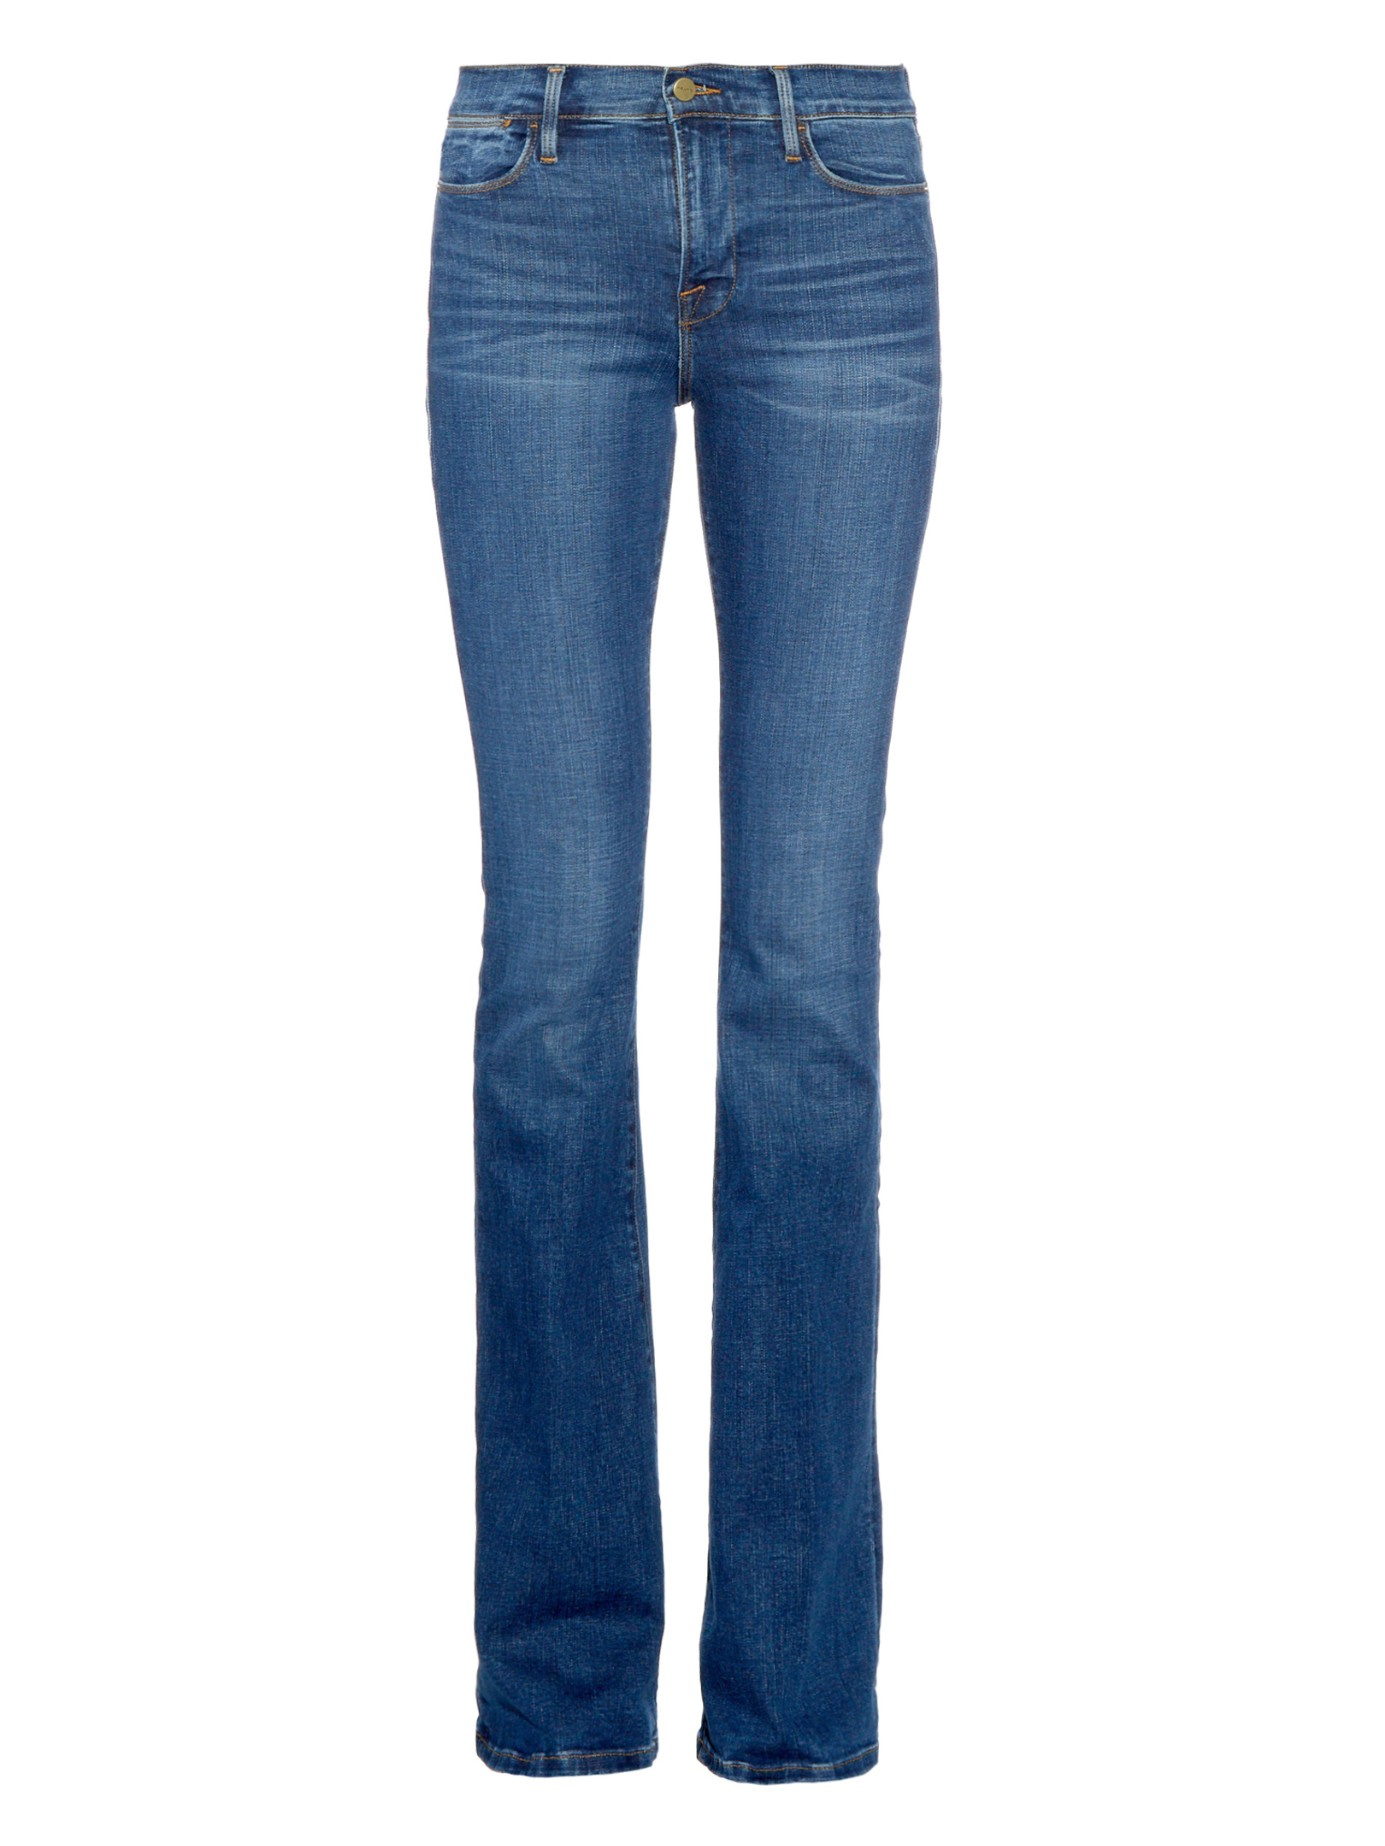 FRAME Denim Le High Flare High-rise Jeans in Indigo (Blue) - Lyst